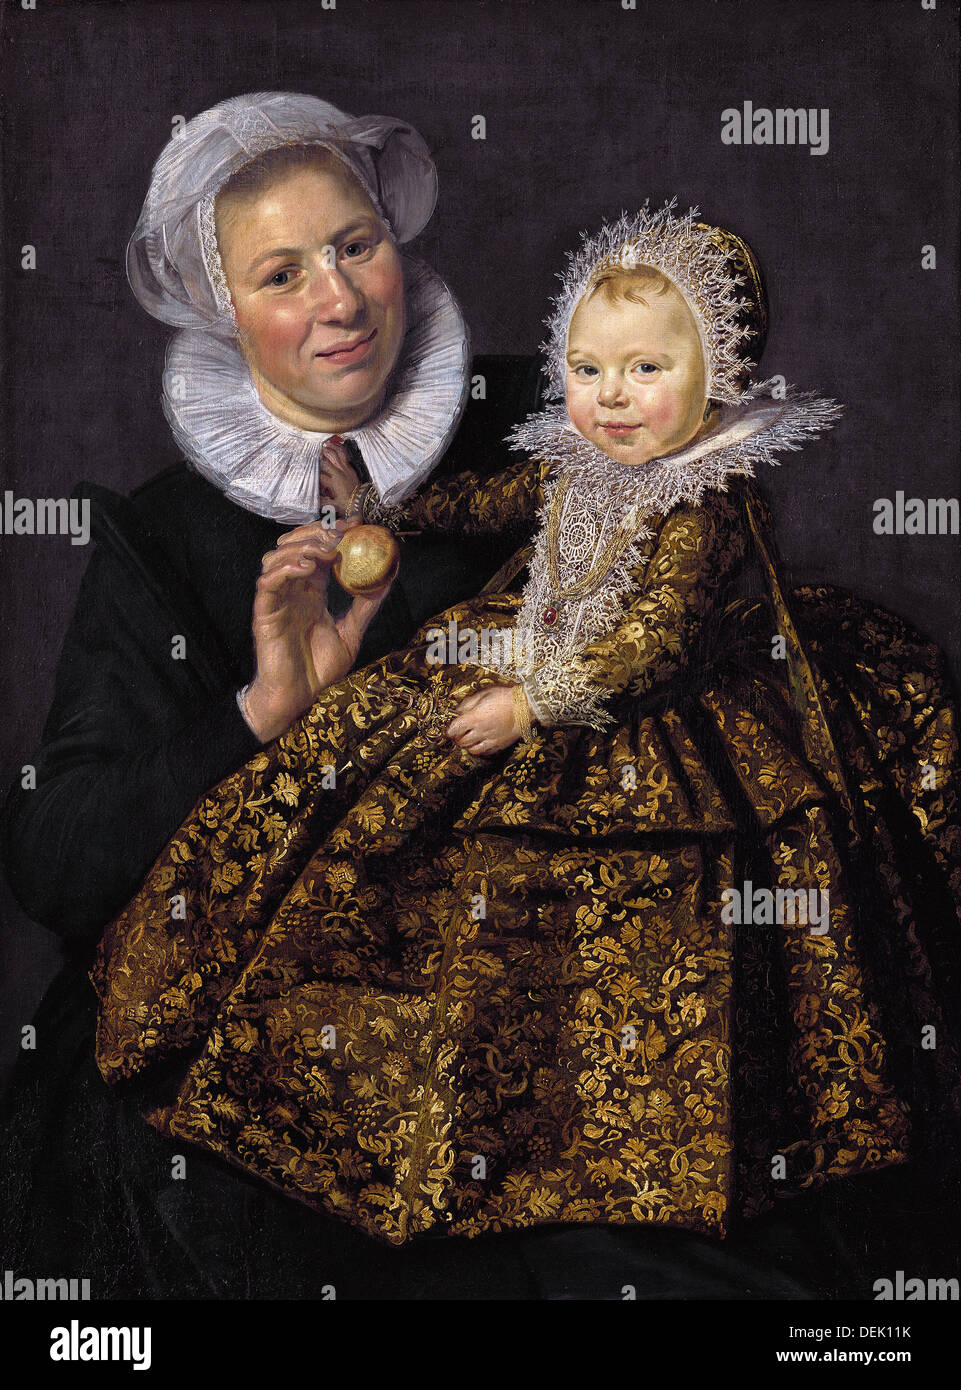 Frans Hals - Die mit dem Amme Genre - 1620 - Gemaldegalerie, Berlin Banque D'Images